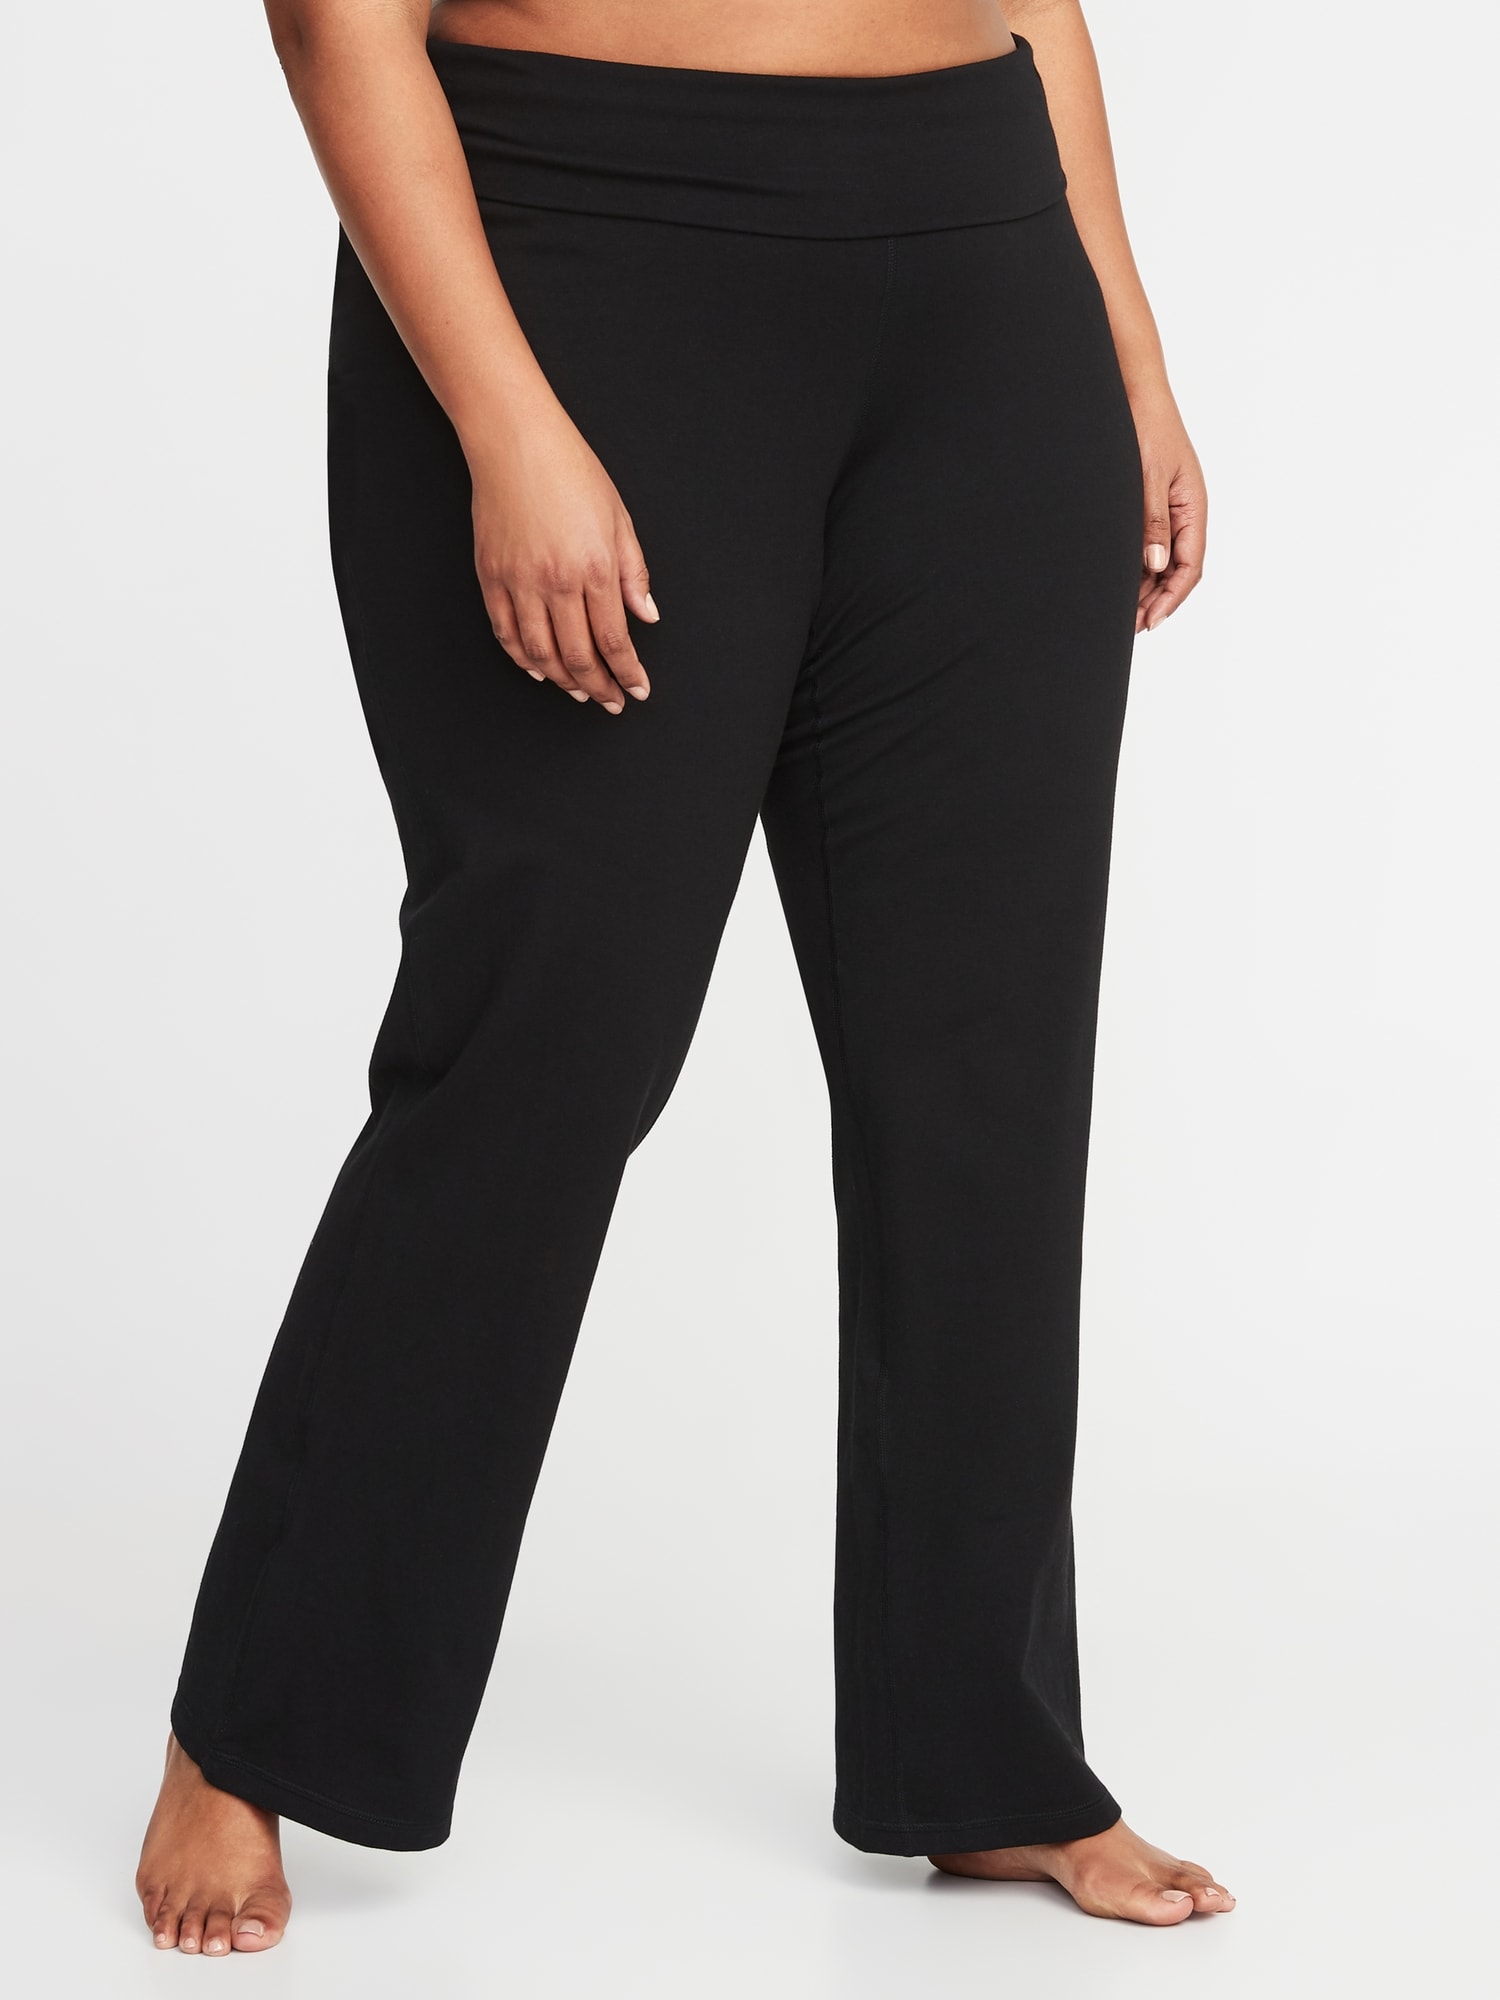 Spalding Plus Size Women's Bootleg Yoga Pant 2xl Black